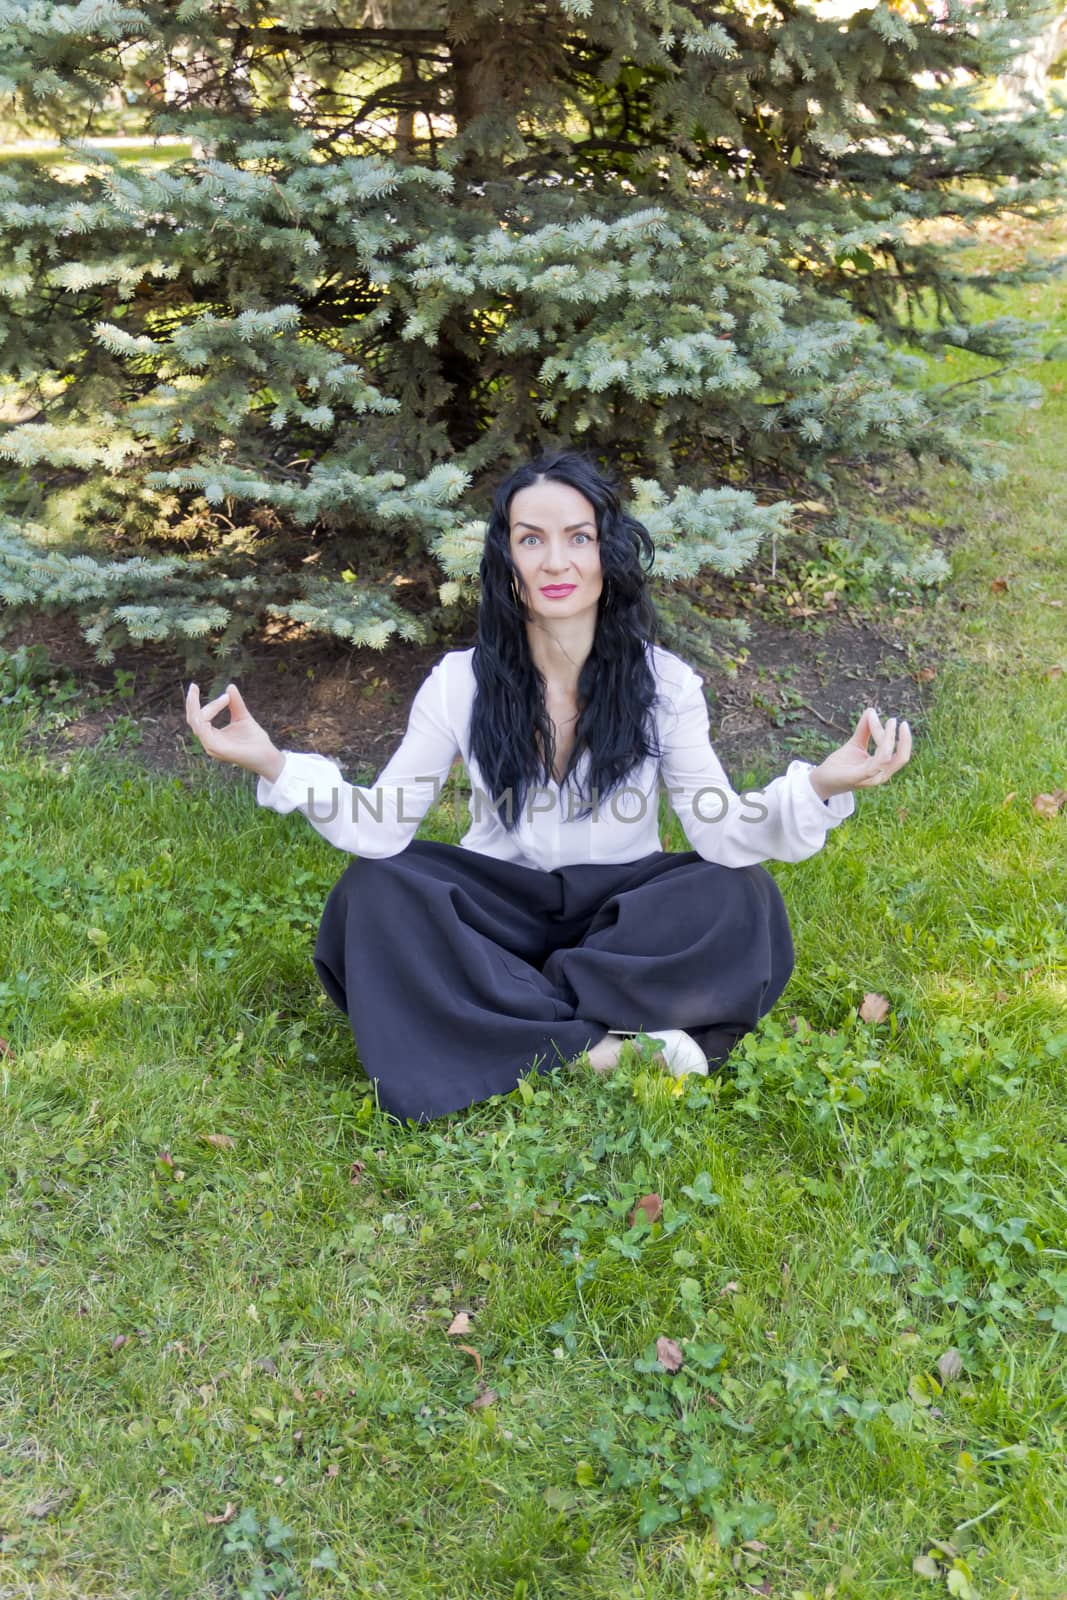 Brunette on green grass in yoga pose by Julialine